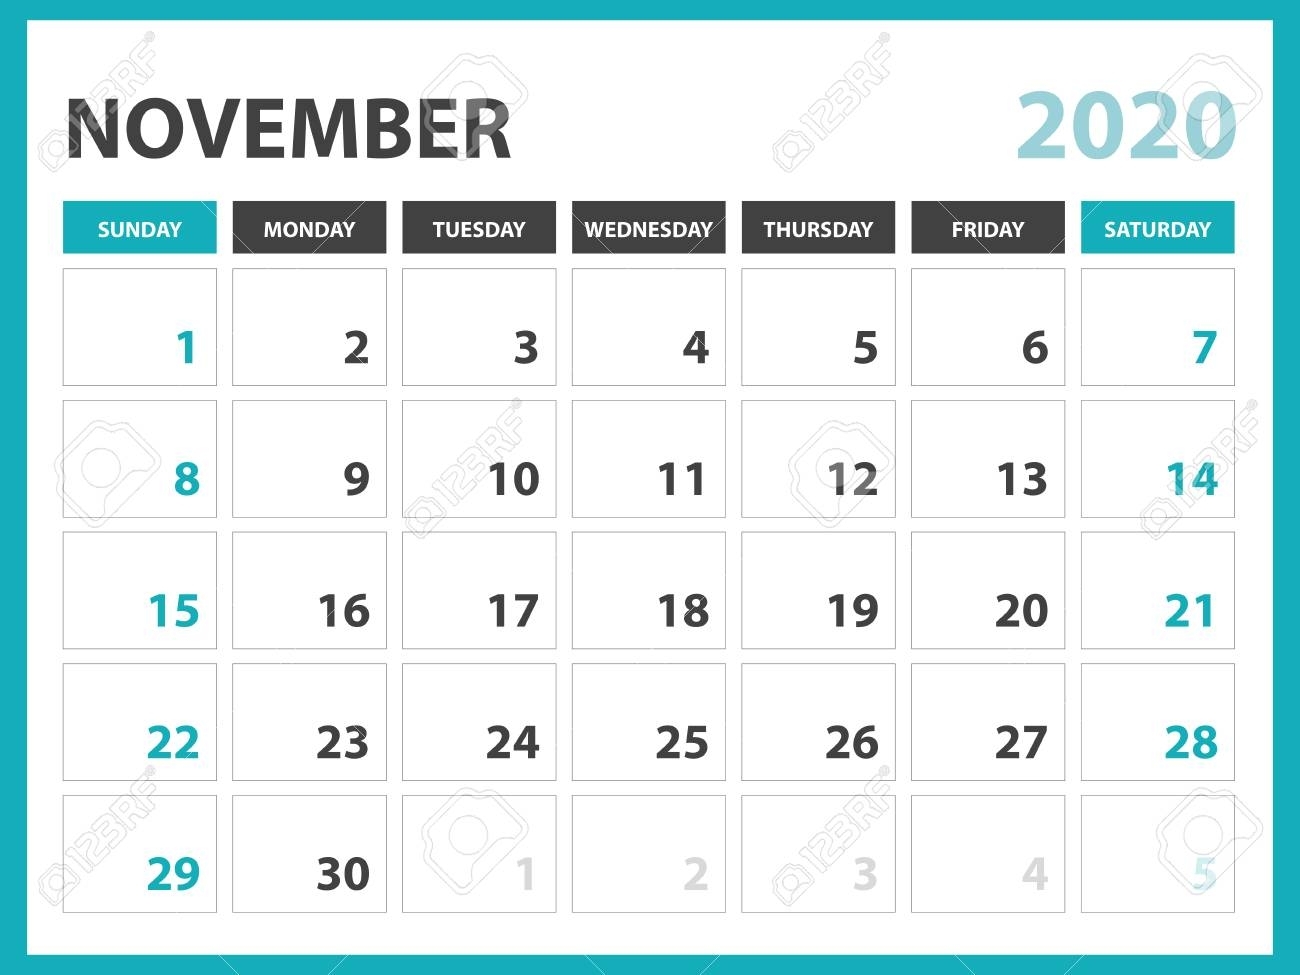 Desk Calendar Layout Size 8 X 6 Inch, November 2020 Calendar..